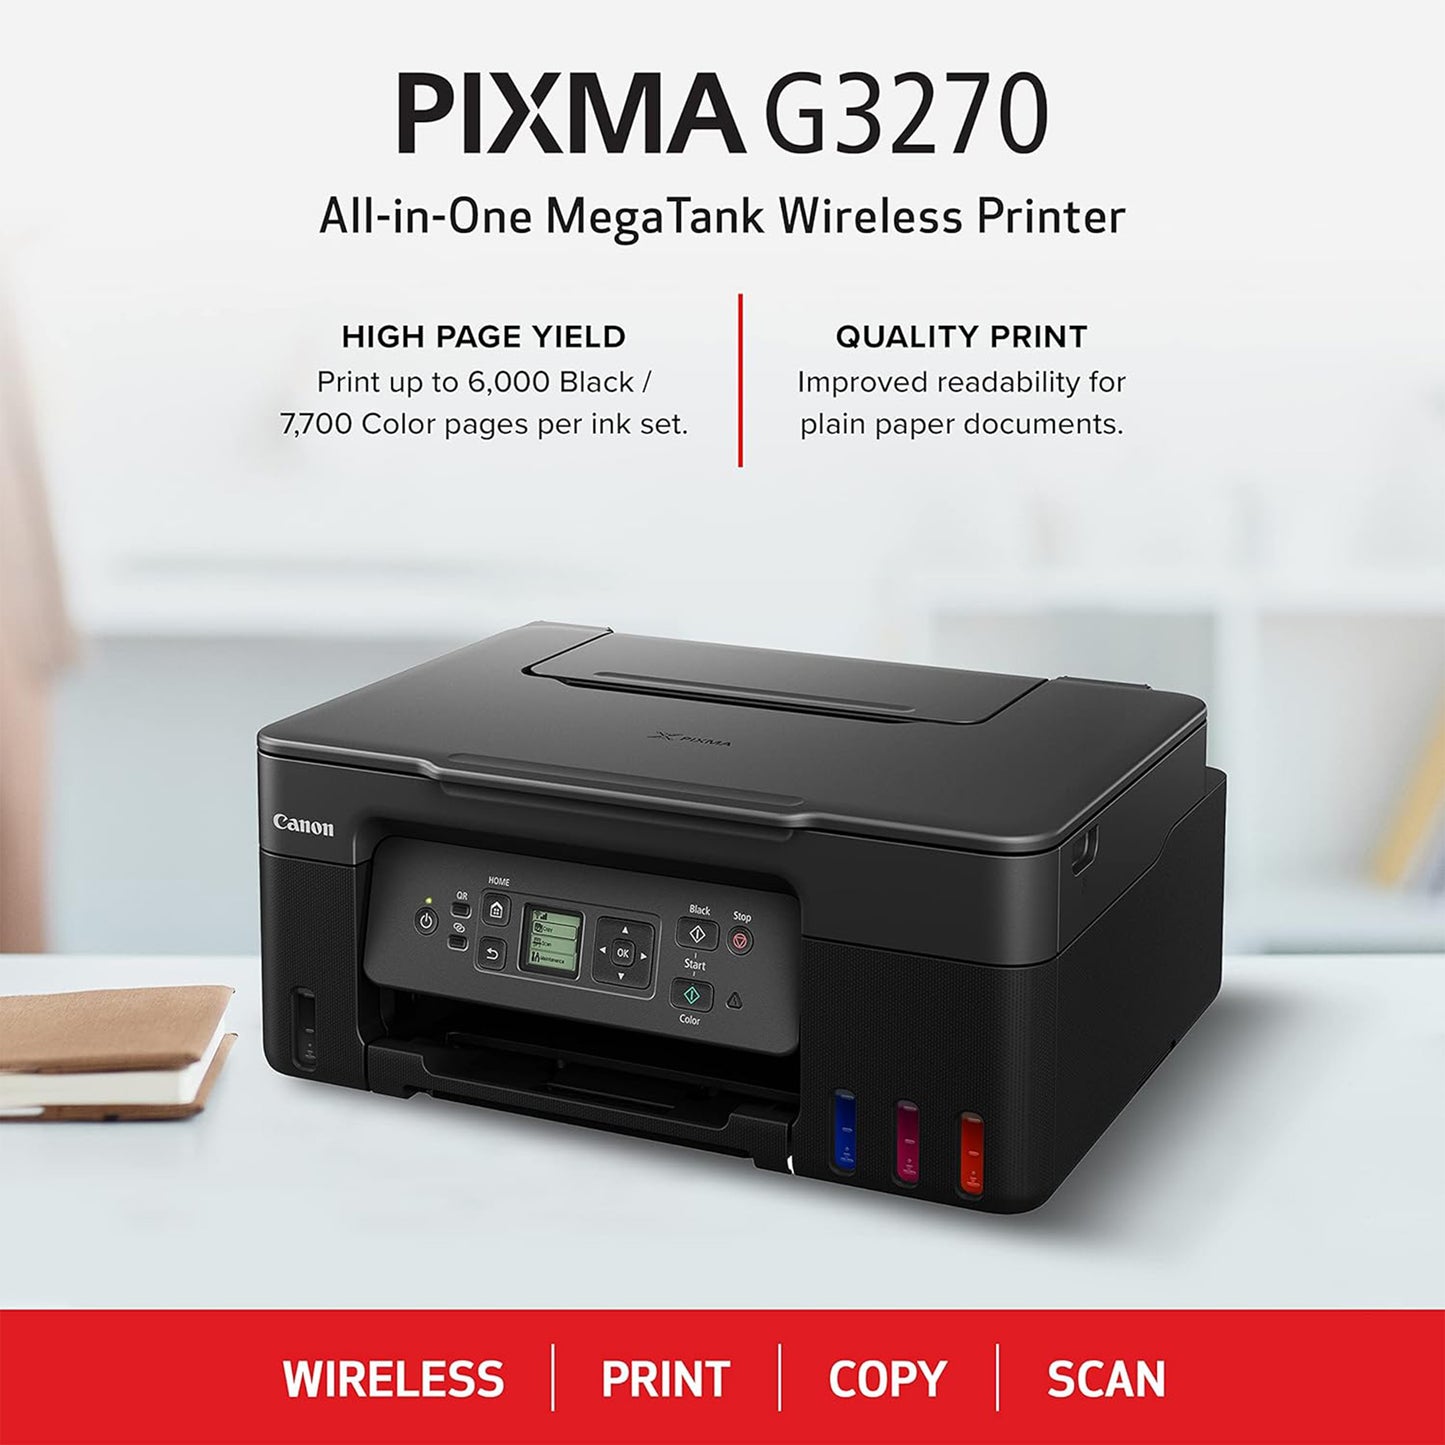 MegaTank PIXMA G3270 Wireless All-in-One Printer